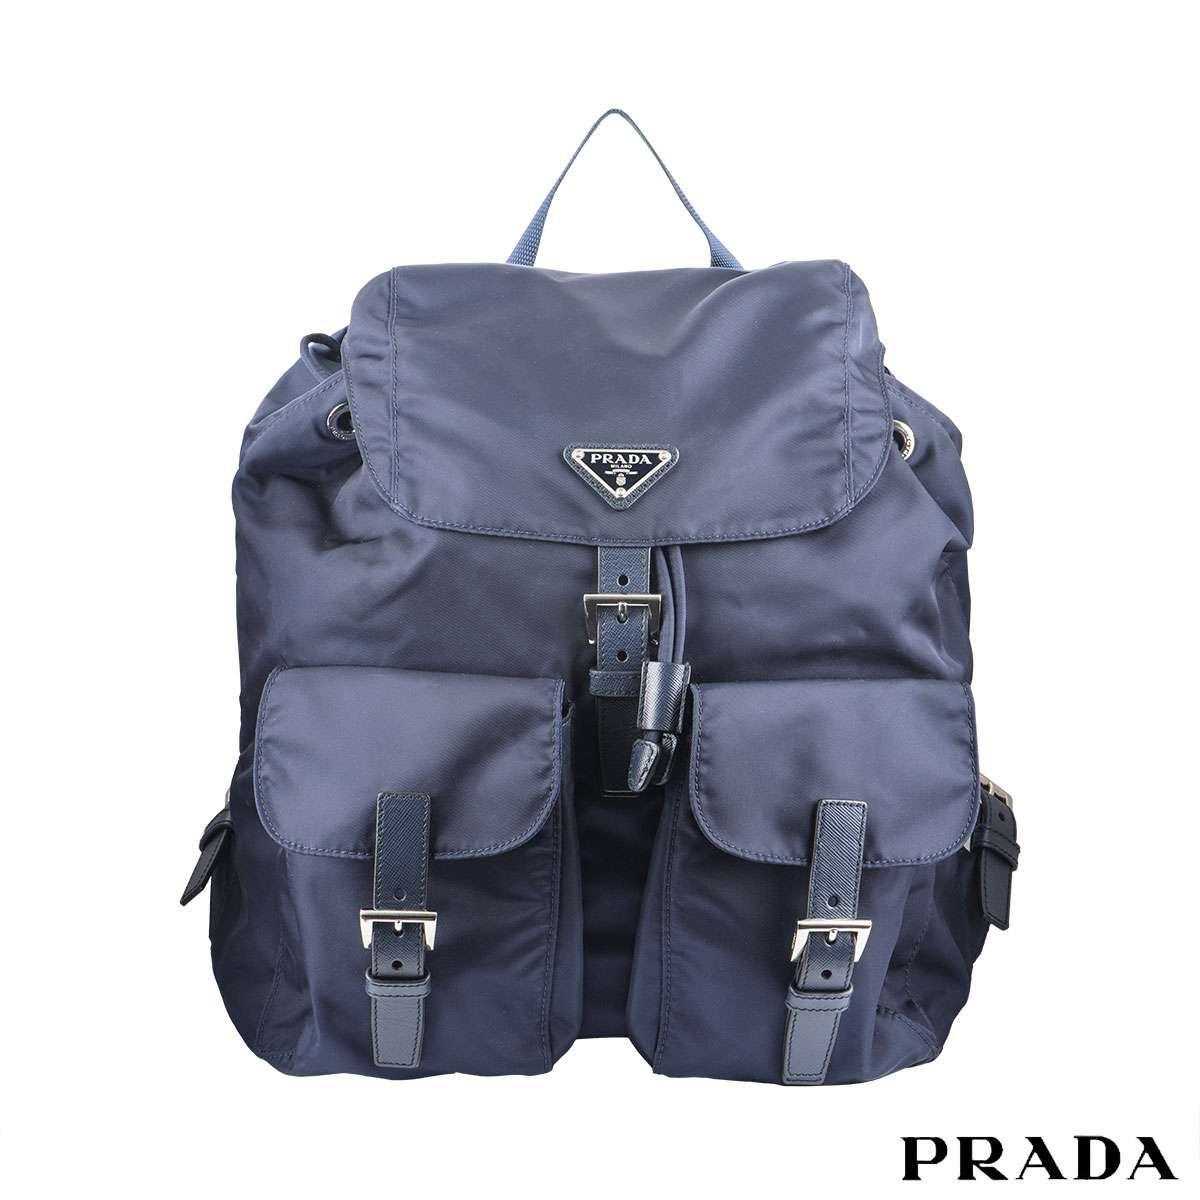 Actualizar 45+ imagen prada backpack leather - Abzlocal.mx